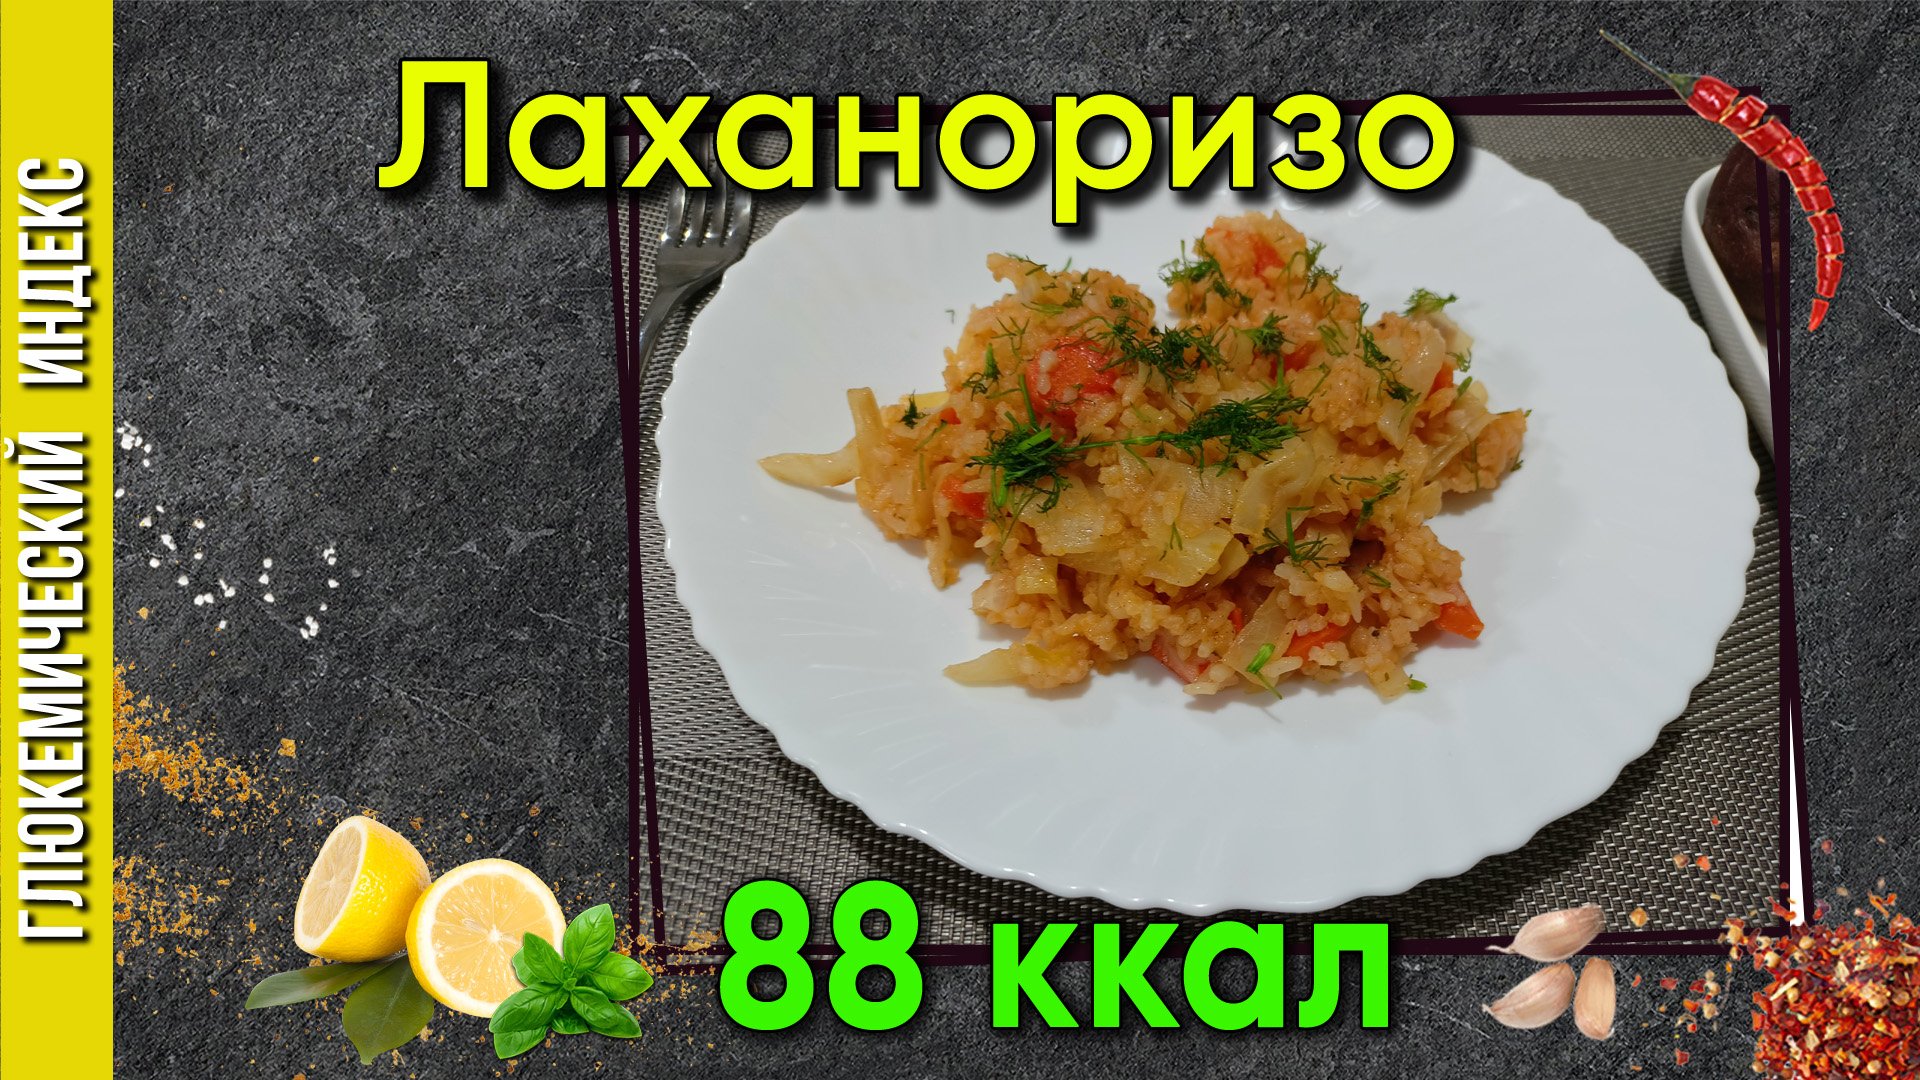 Лаханоризо — Рецепт вкусного греческого блюда в мультиварке.